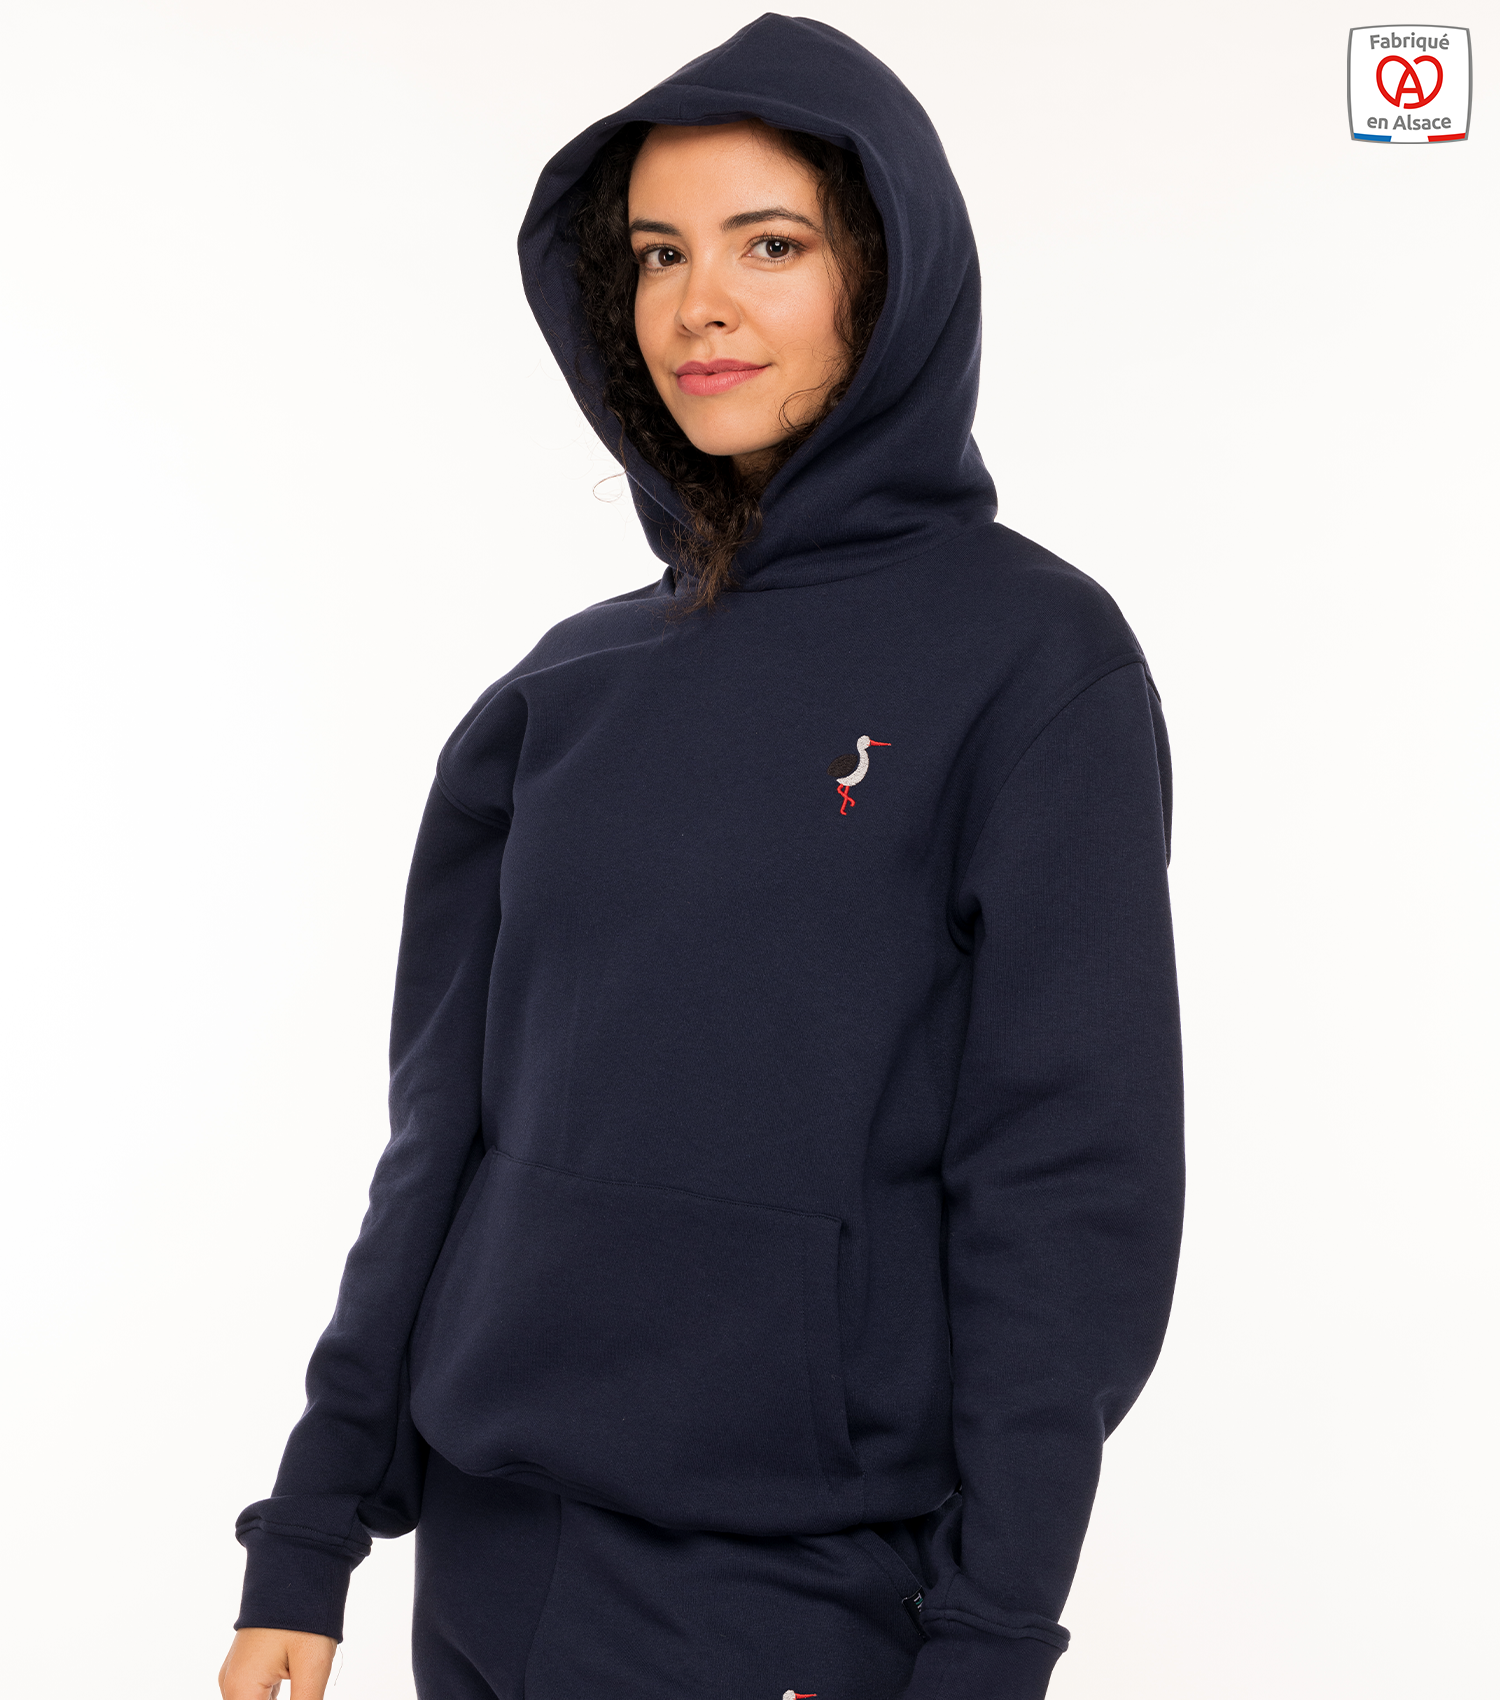 theim-hoodie-cigogne-femme-made-in-france-1500-x-1700px